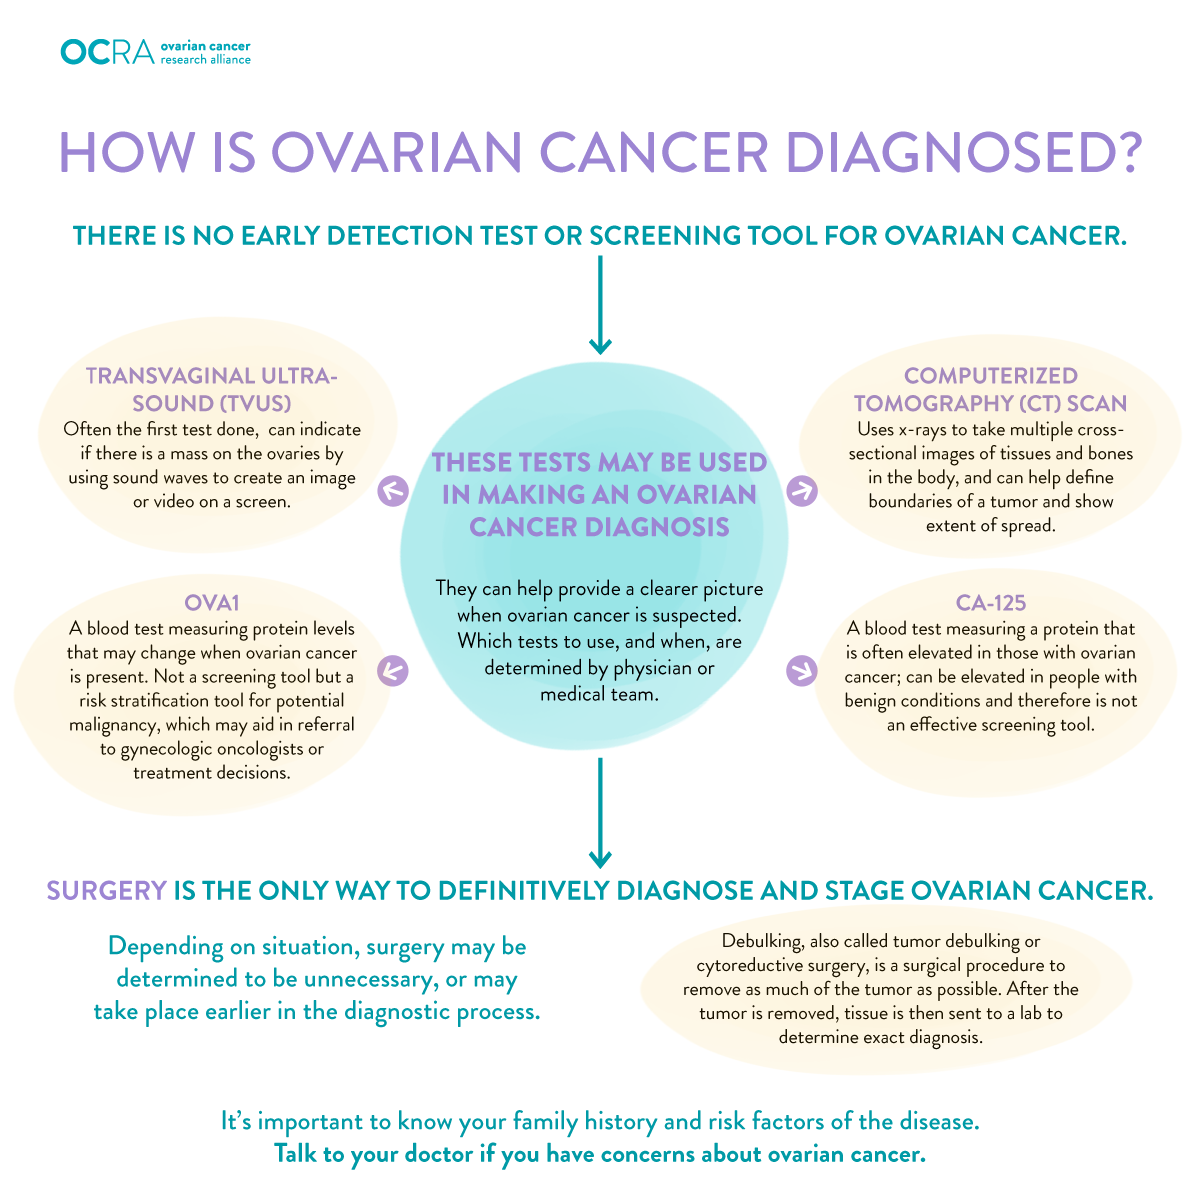 ovarian cancer prevention